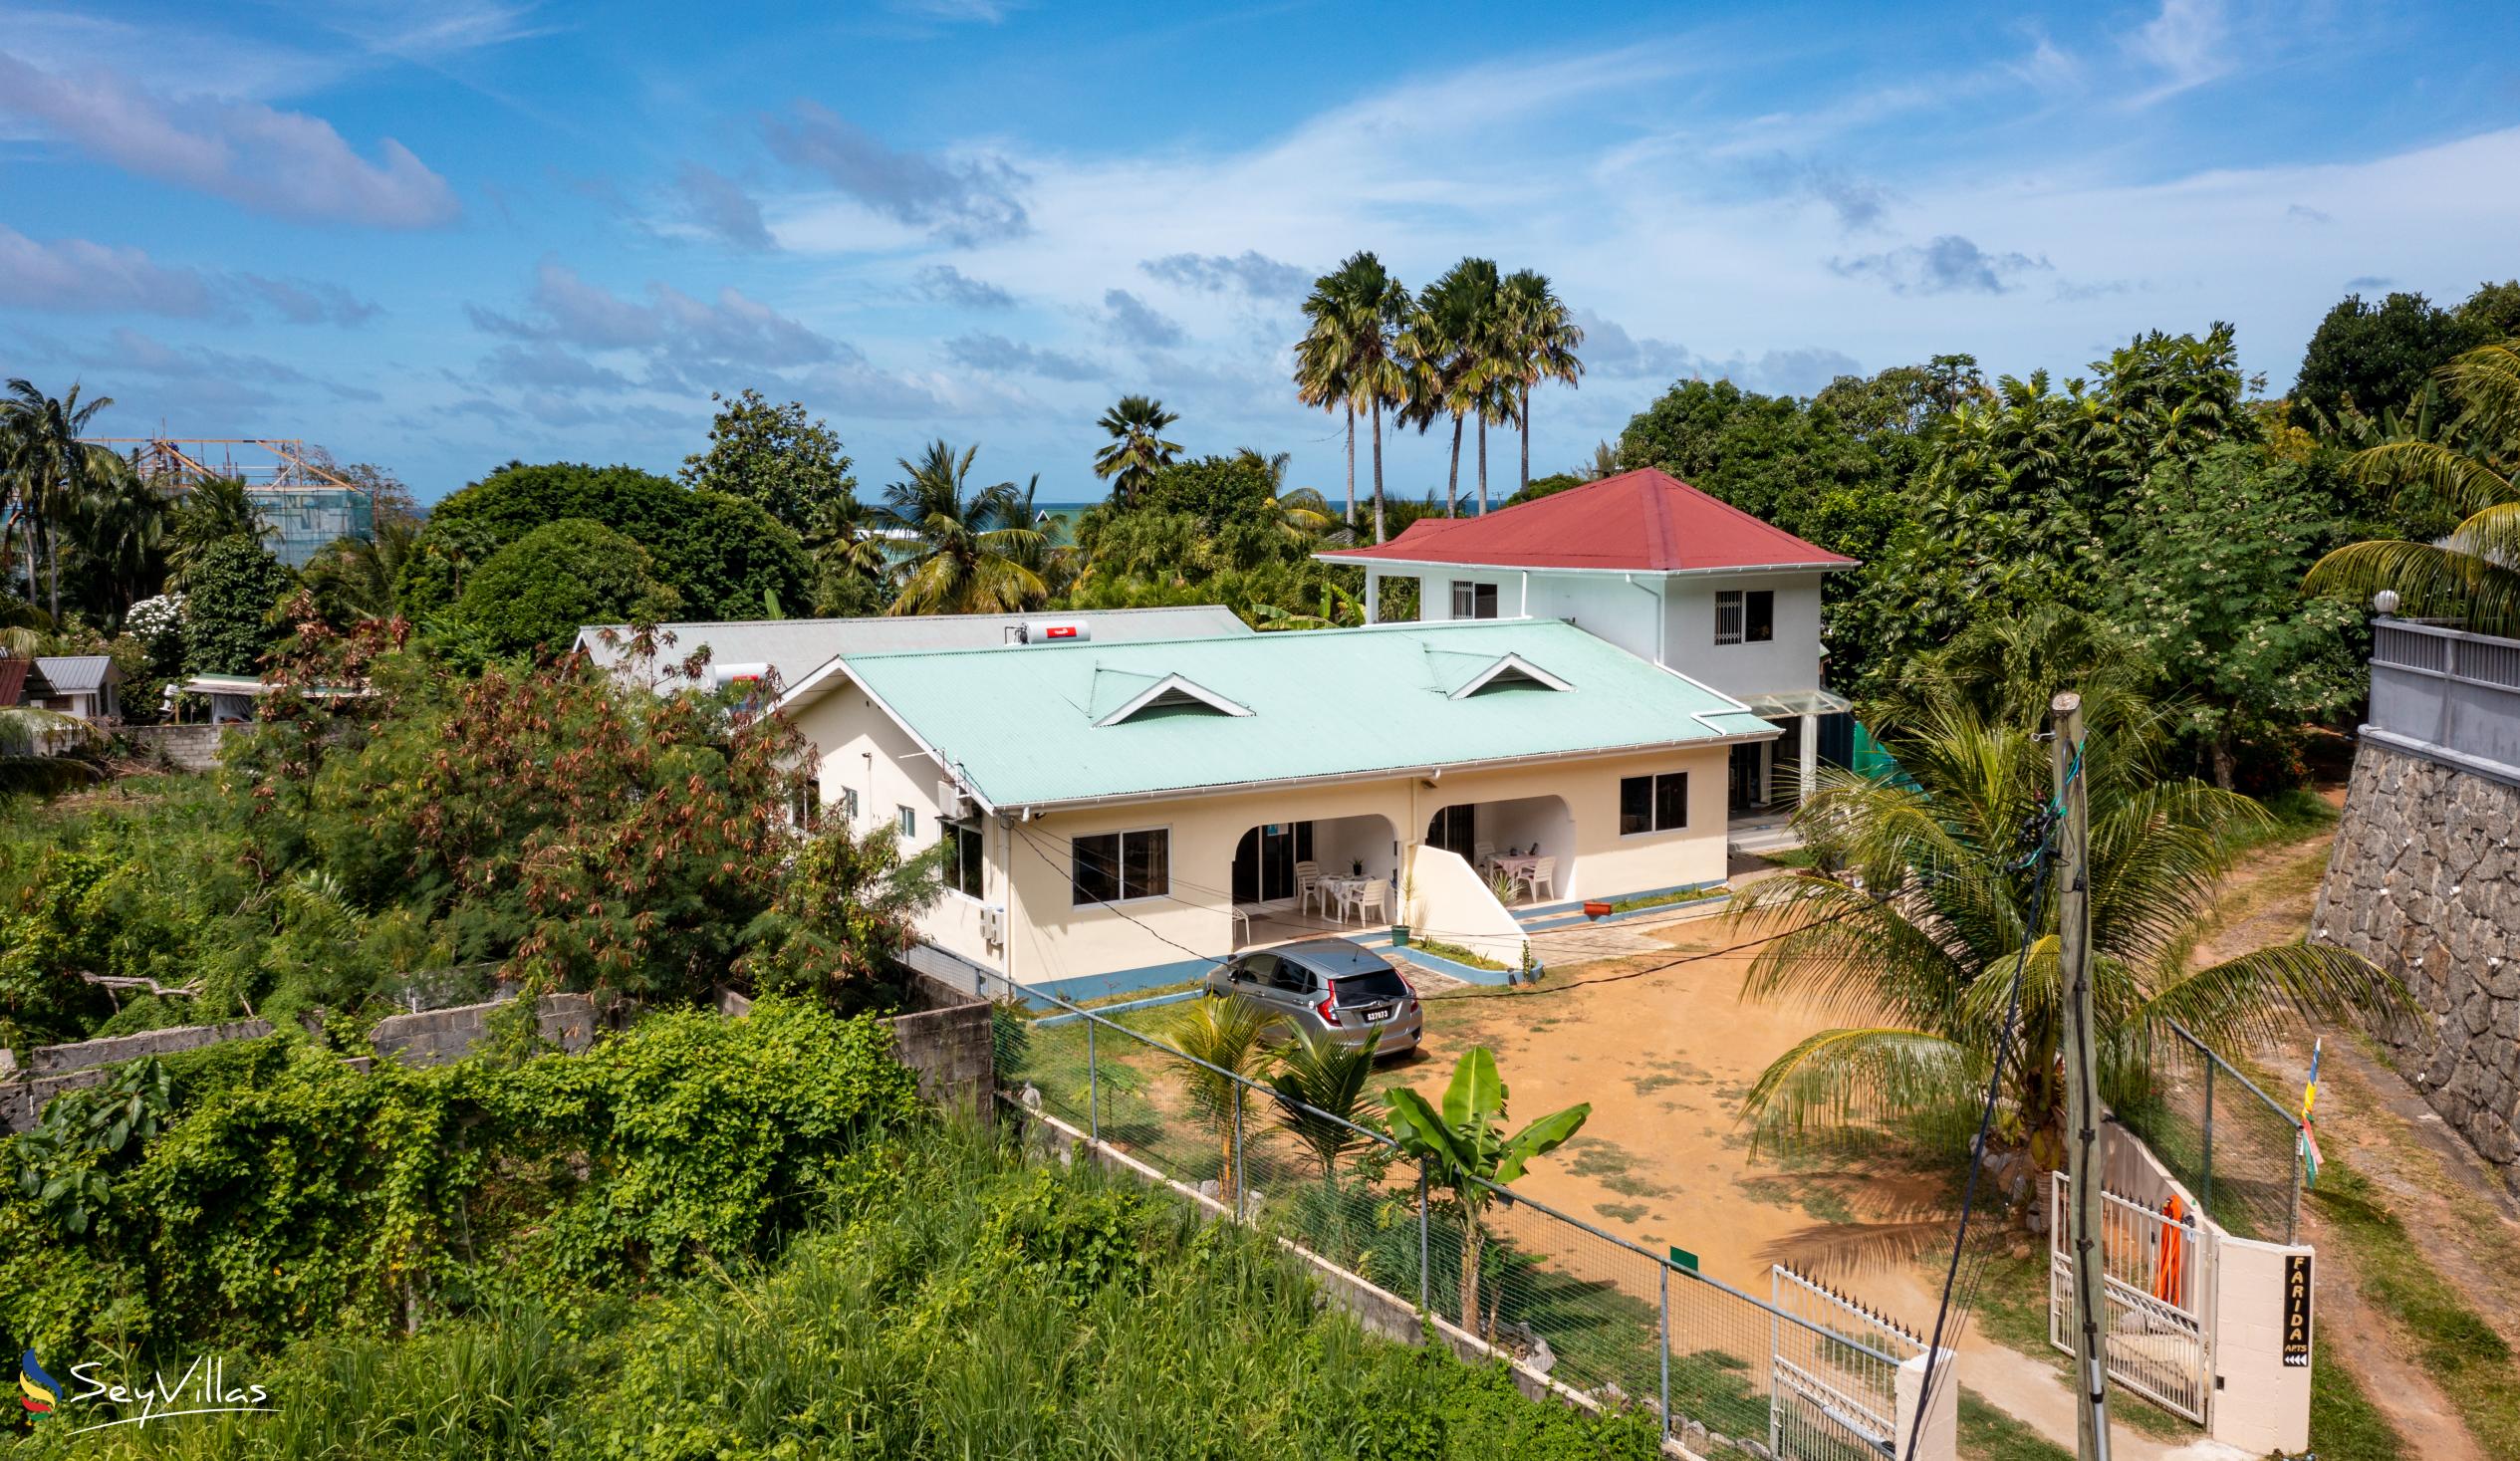 Foto 11: Farida Apartments - Aussenbereich - Mahé (Seychellen)